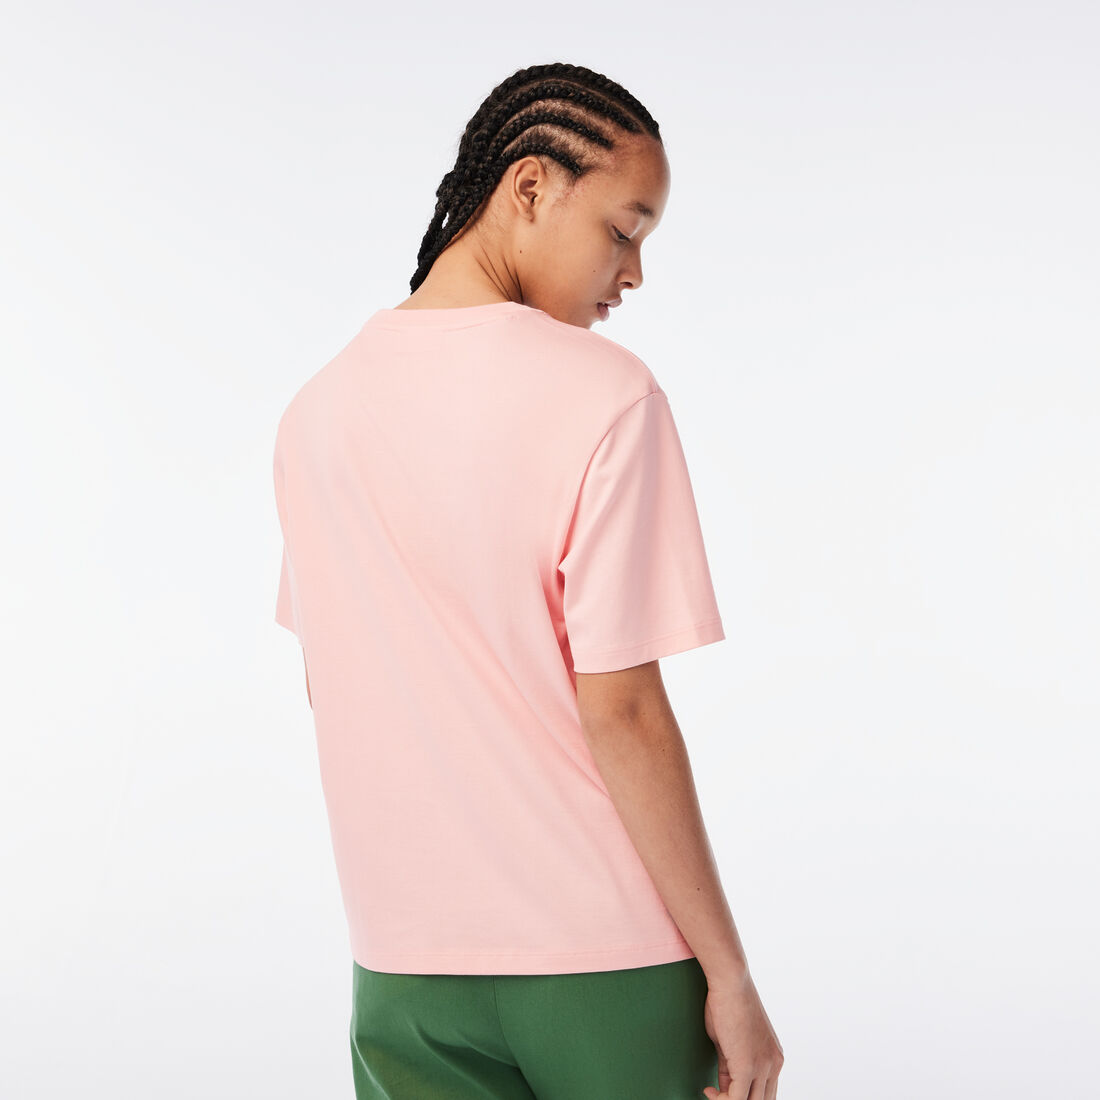 Lacoste Crew Neck Premium Baumwoll T-shirts Damen Rosa | YOMW-69702